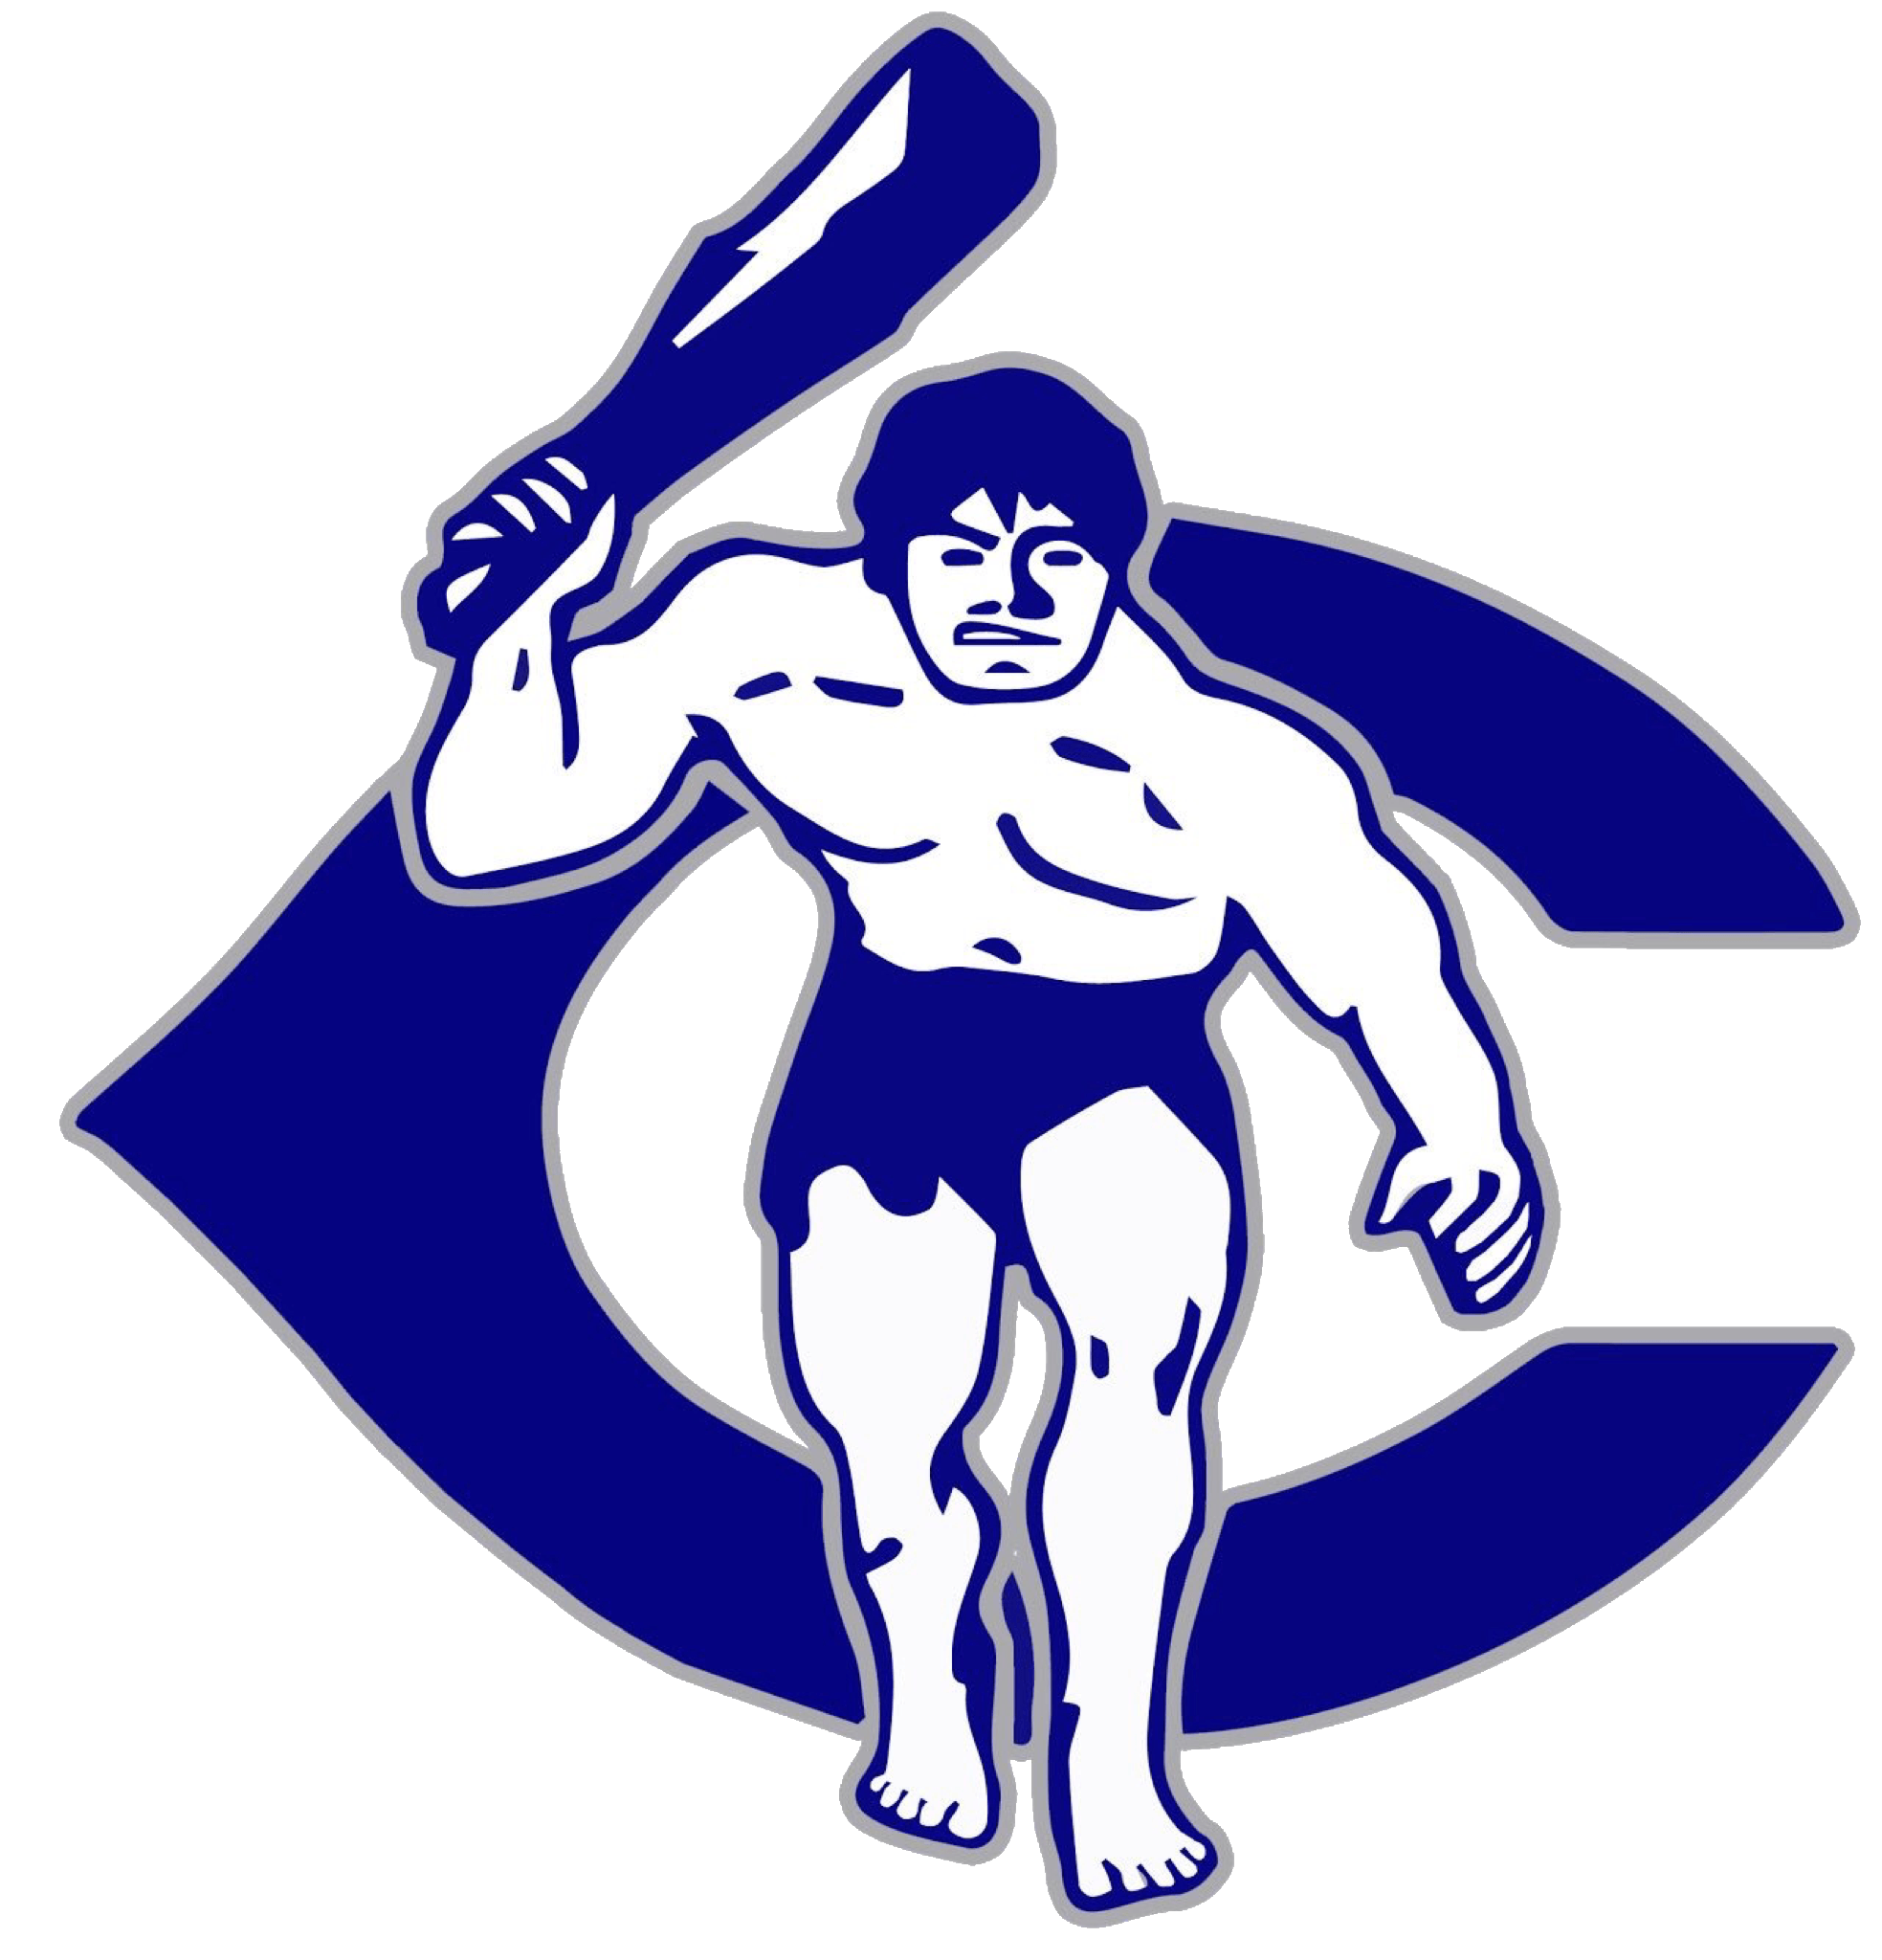 Carlsbad Logo - The Carlsbad Cavemen